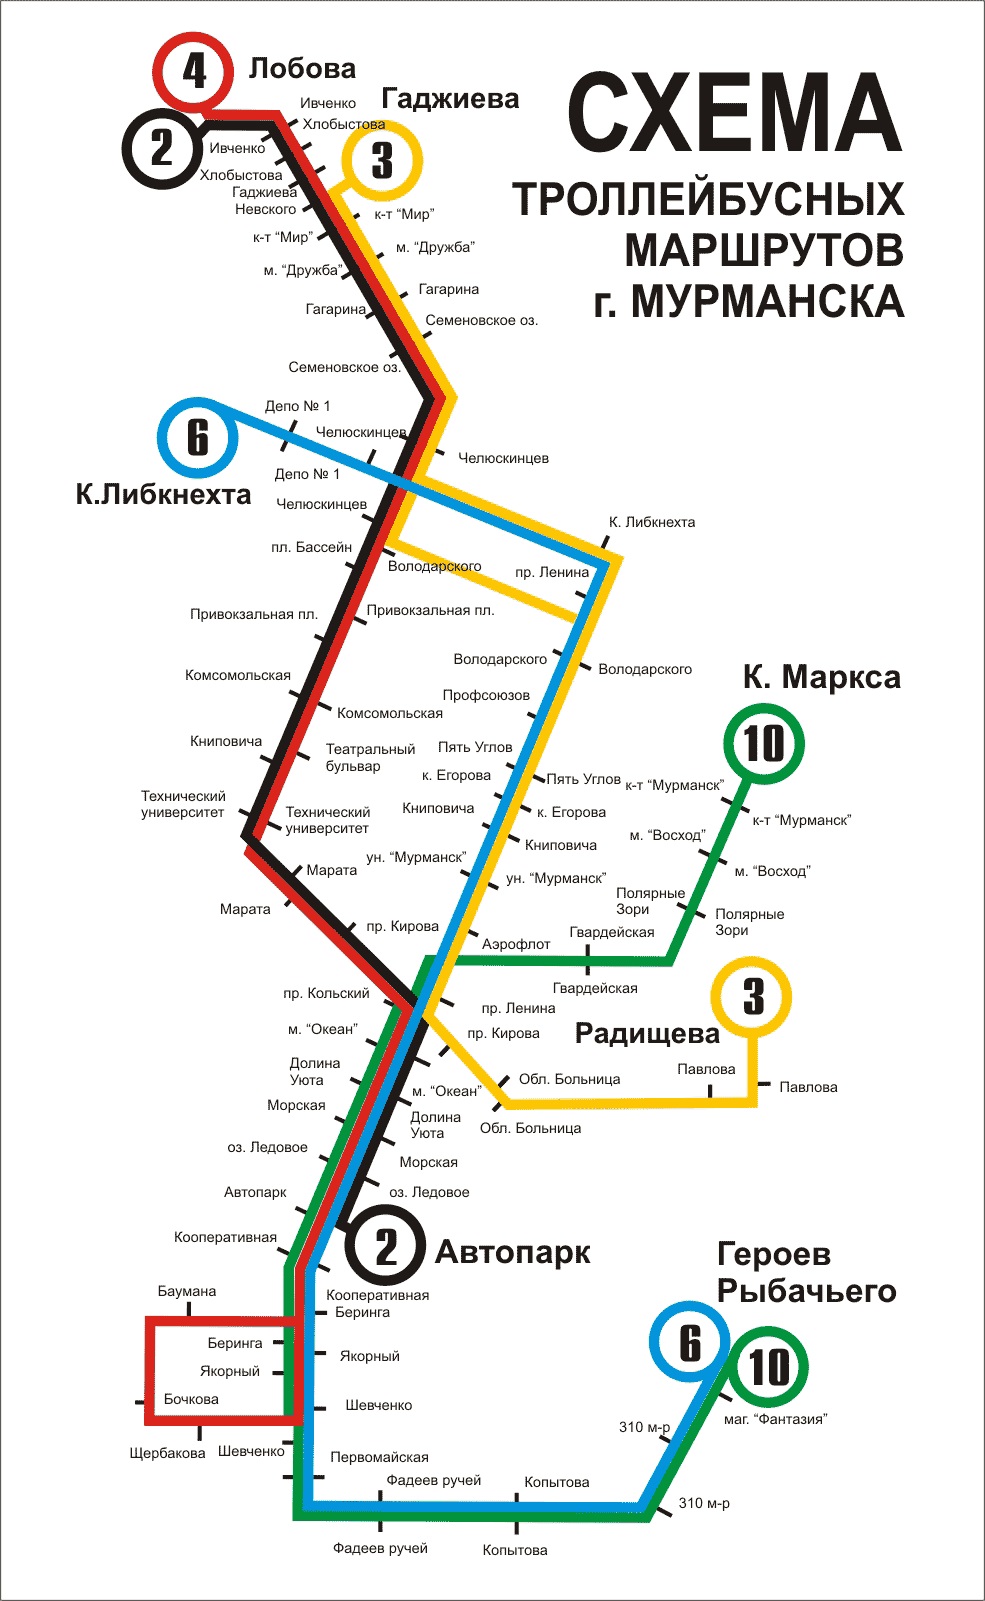 Карта транспорта мурманск. Маршрут 4 троллейбуса Мурманск. Маршрут троллейбуса 3 Мурманск. Маршрут троллейбуса 4 Мурманск с остановками Мурманск. Мурманск схема движения троллейбуса 3.